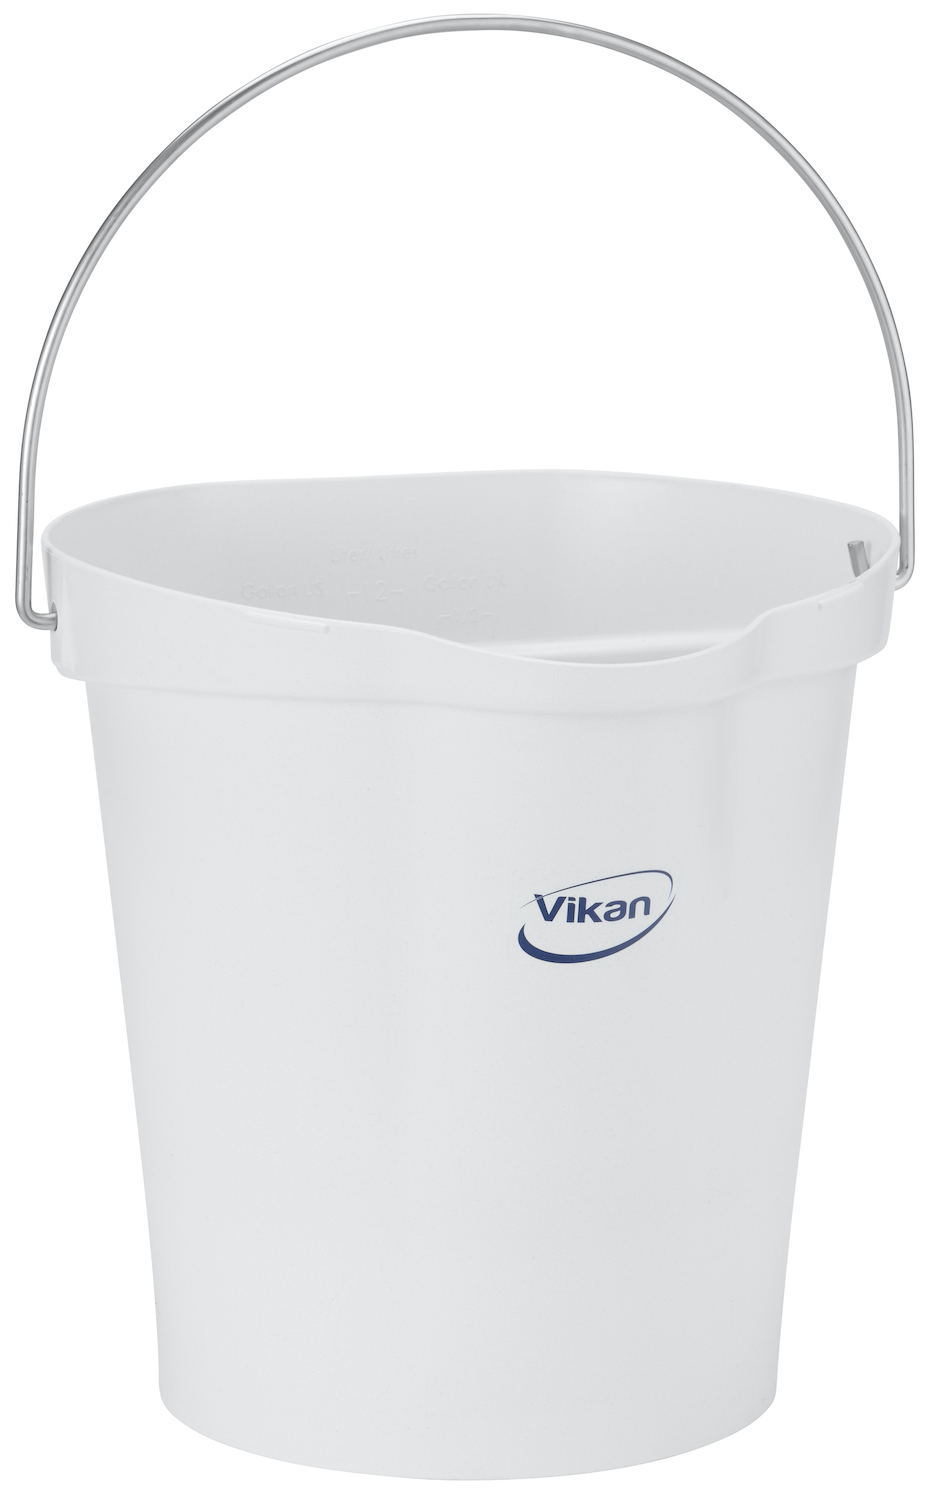 Vikan Bucket, Metal Detectable, 12 Litre, White